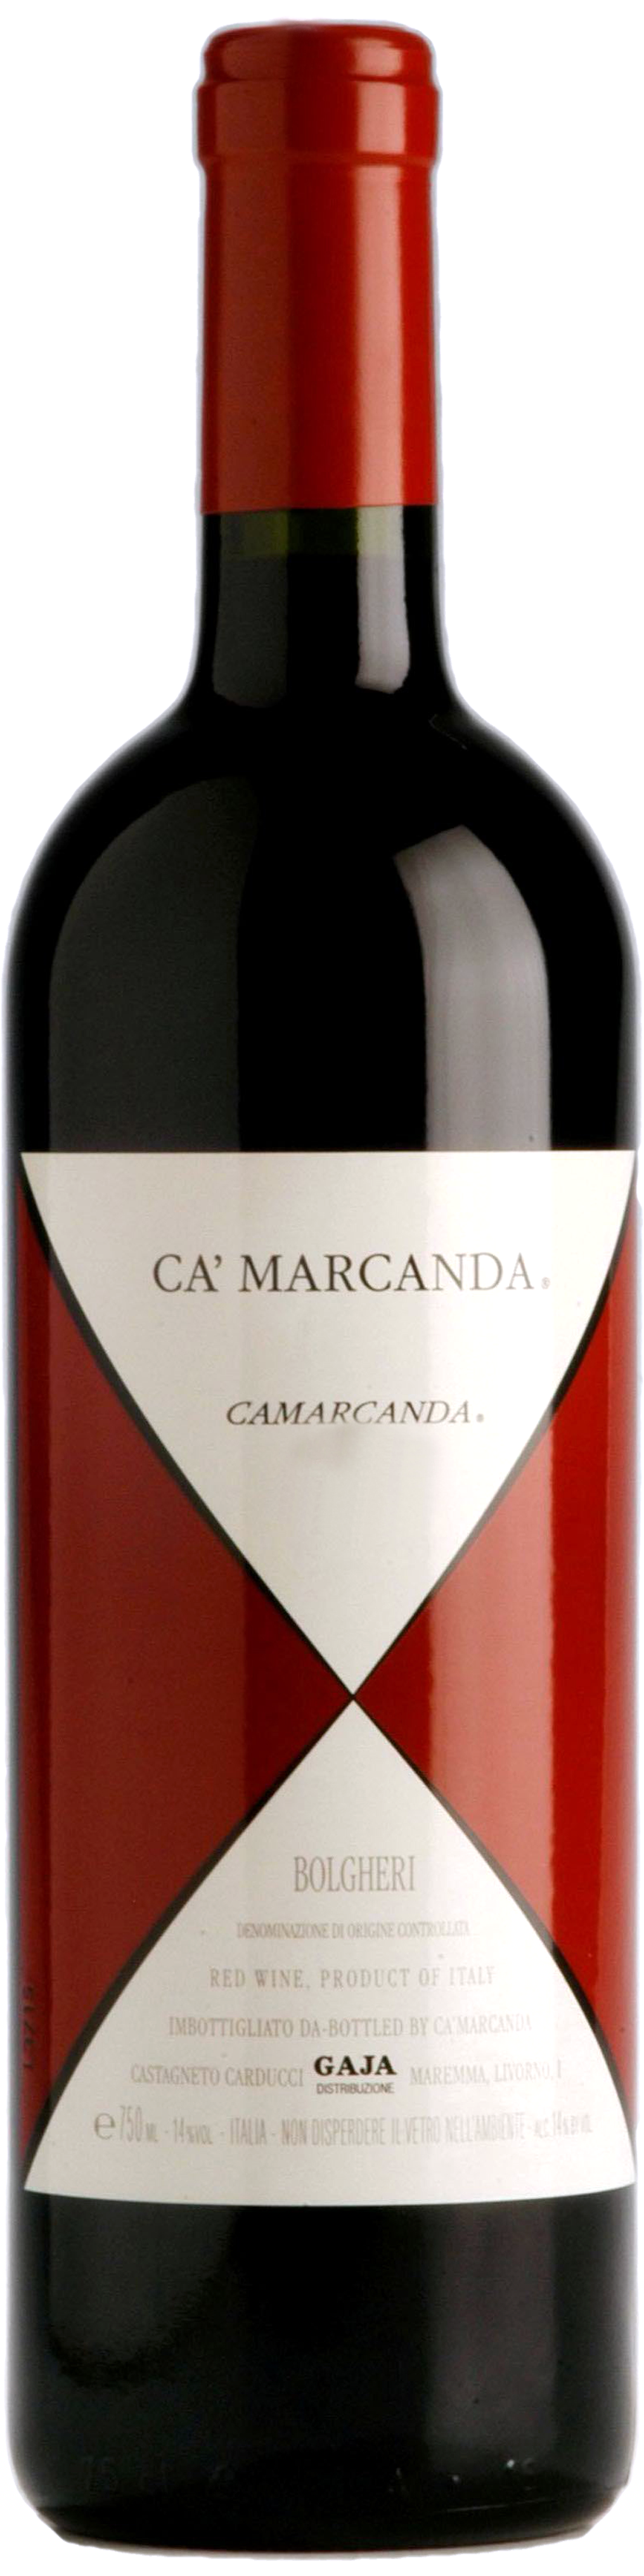 Bottle shot of 2008 Camarcanda